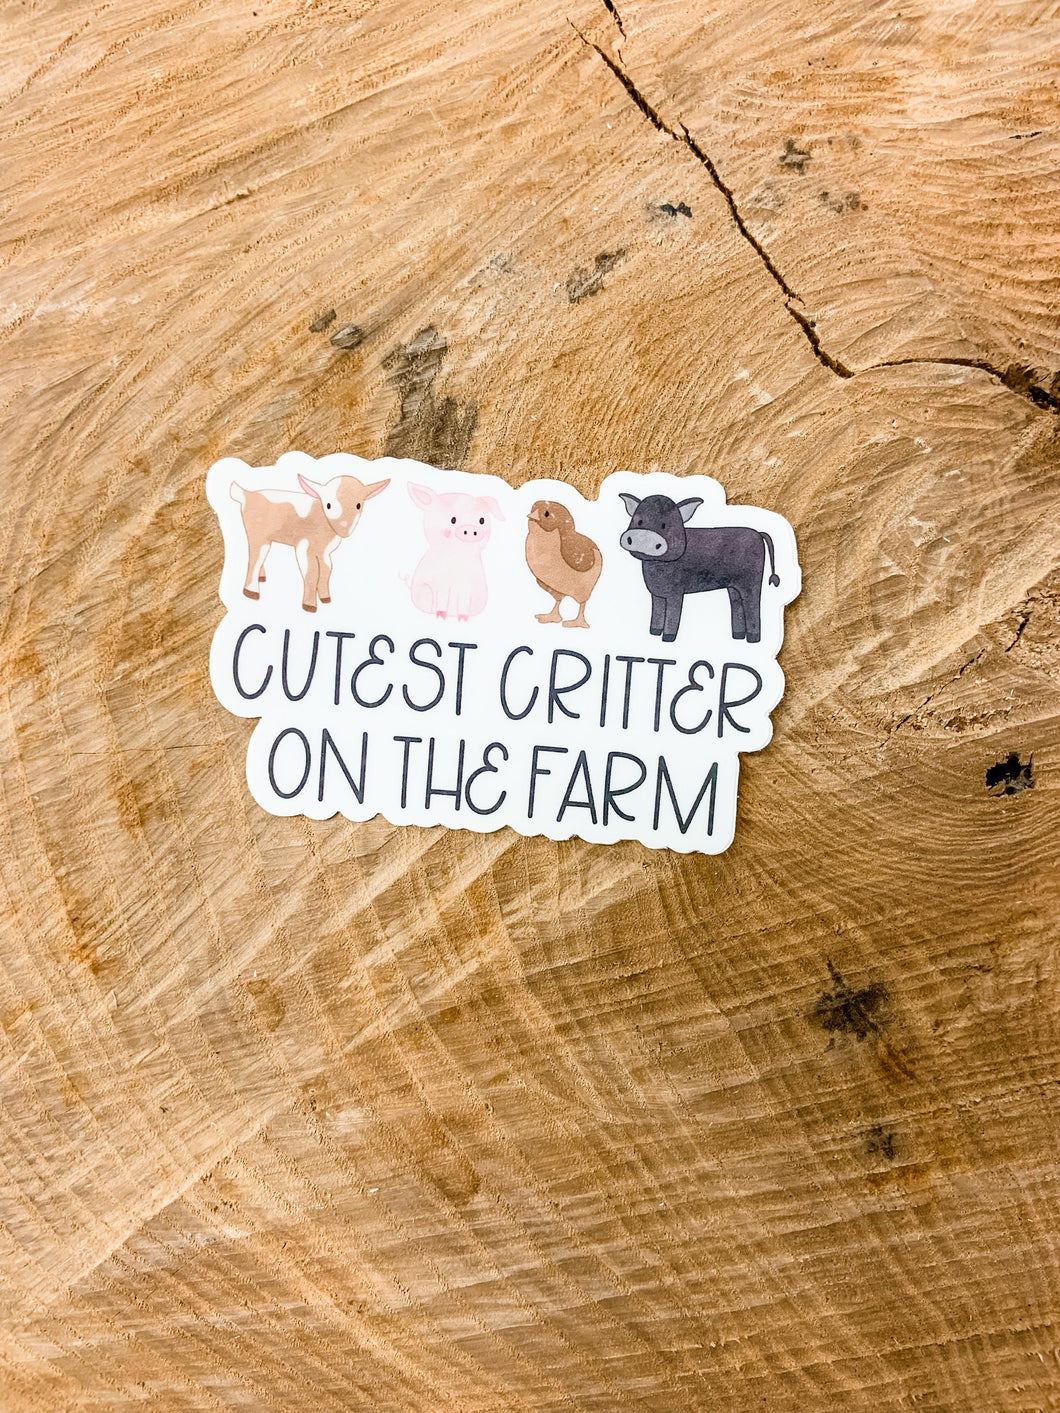 Cutest critter on the farm sticker